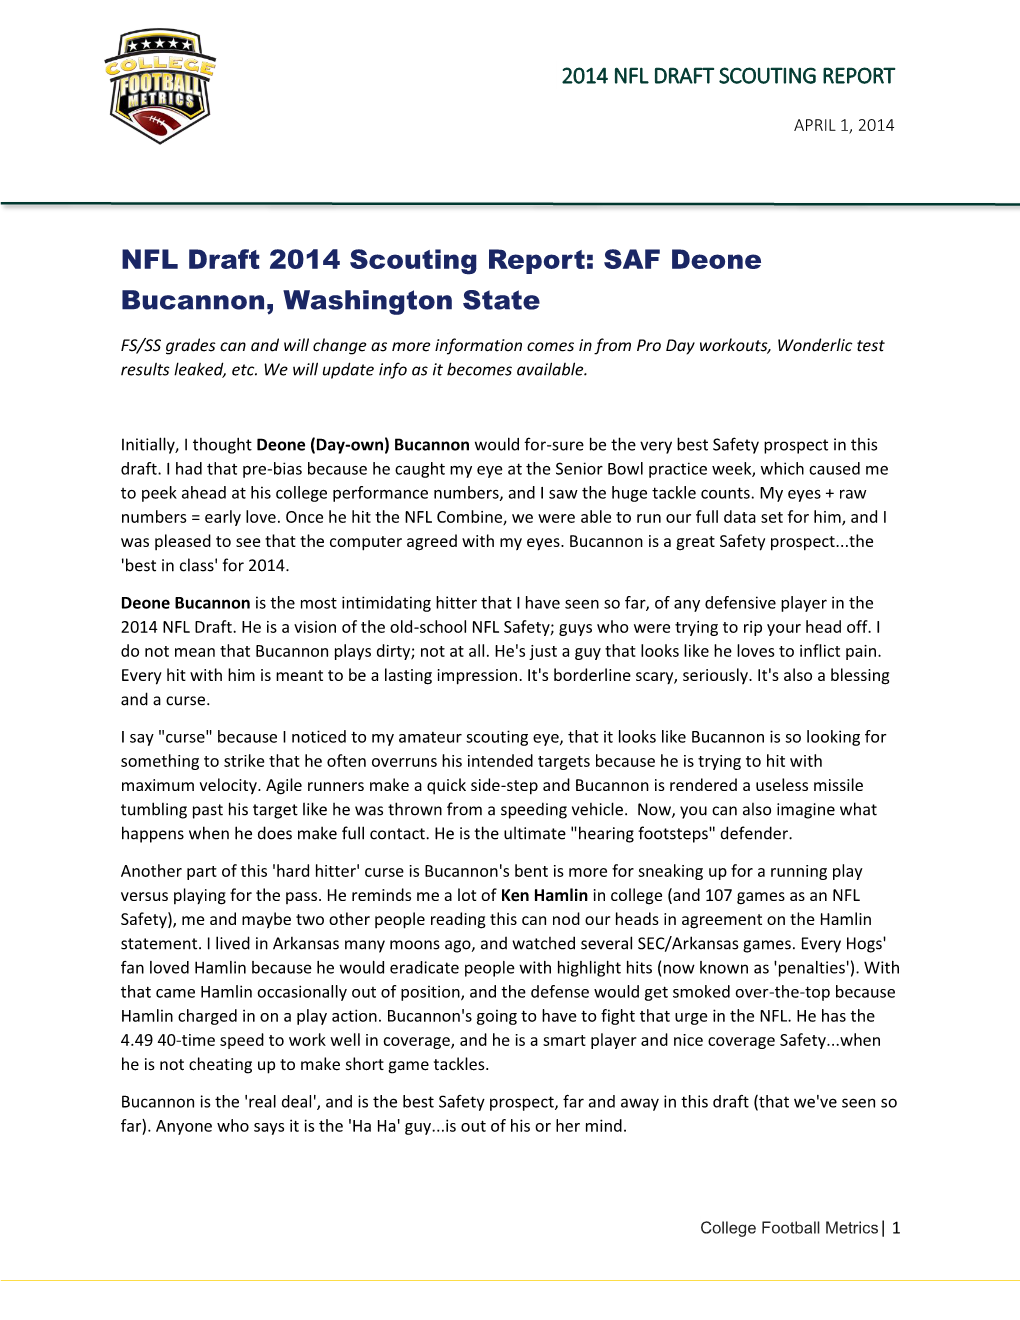 NFL Draft 2014 Scouting Report: SAF Deone Bucannon, Washington State